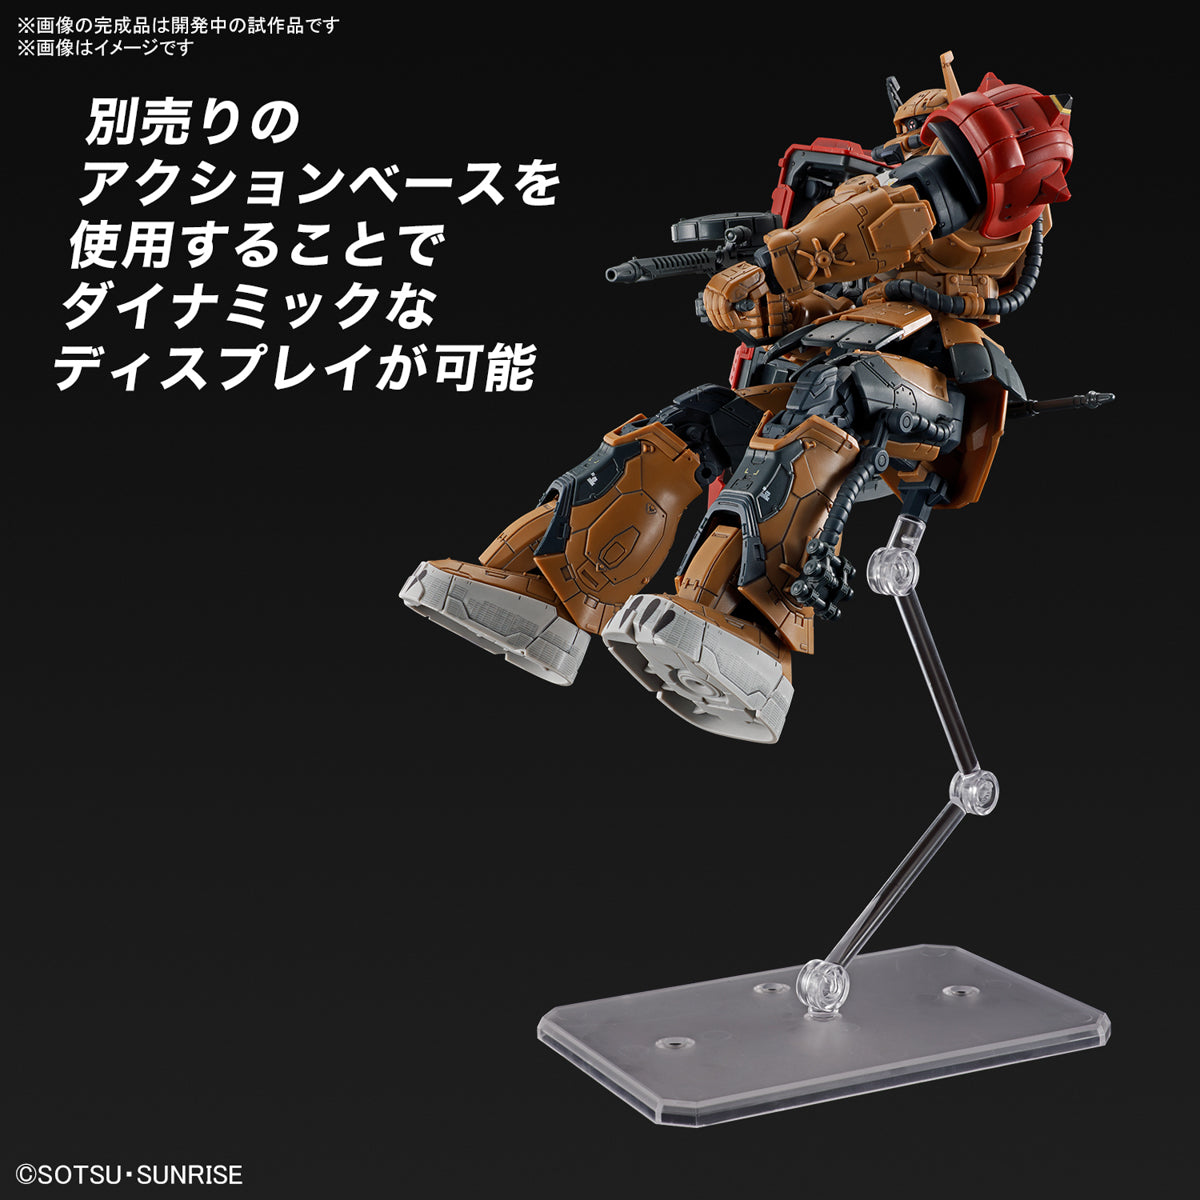 Bandai High Grade Requiem For Vengeance Zaku II F Type Solari's Machine RFV Action Figure Toy Model Kit VCA Singapore